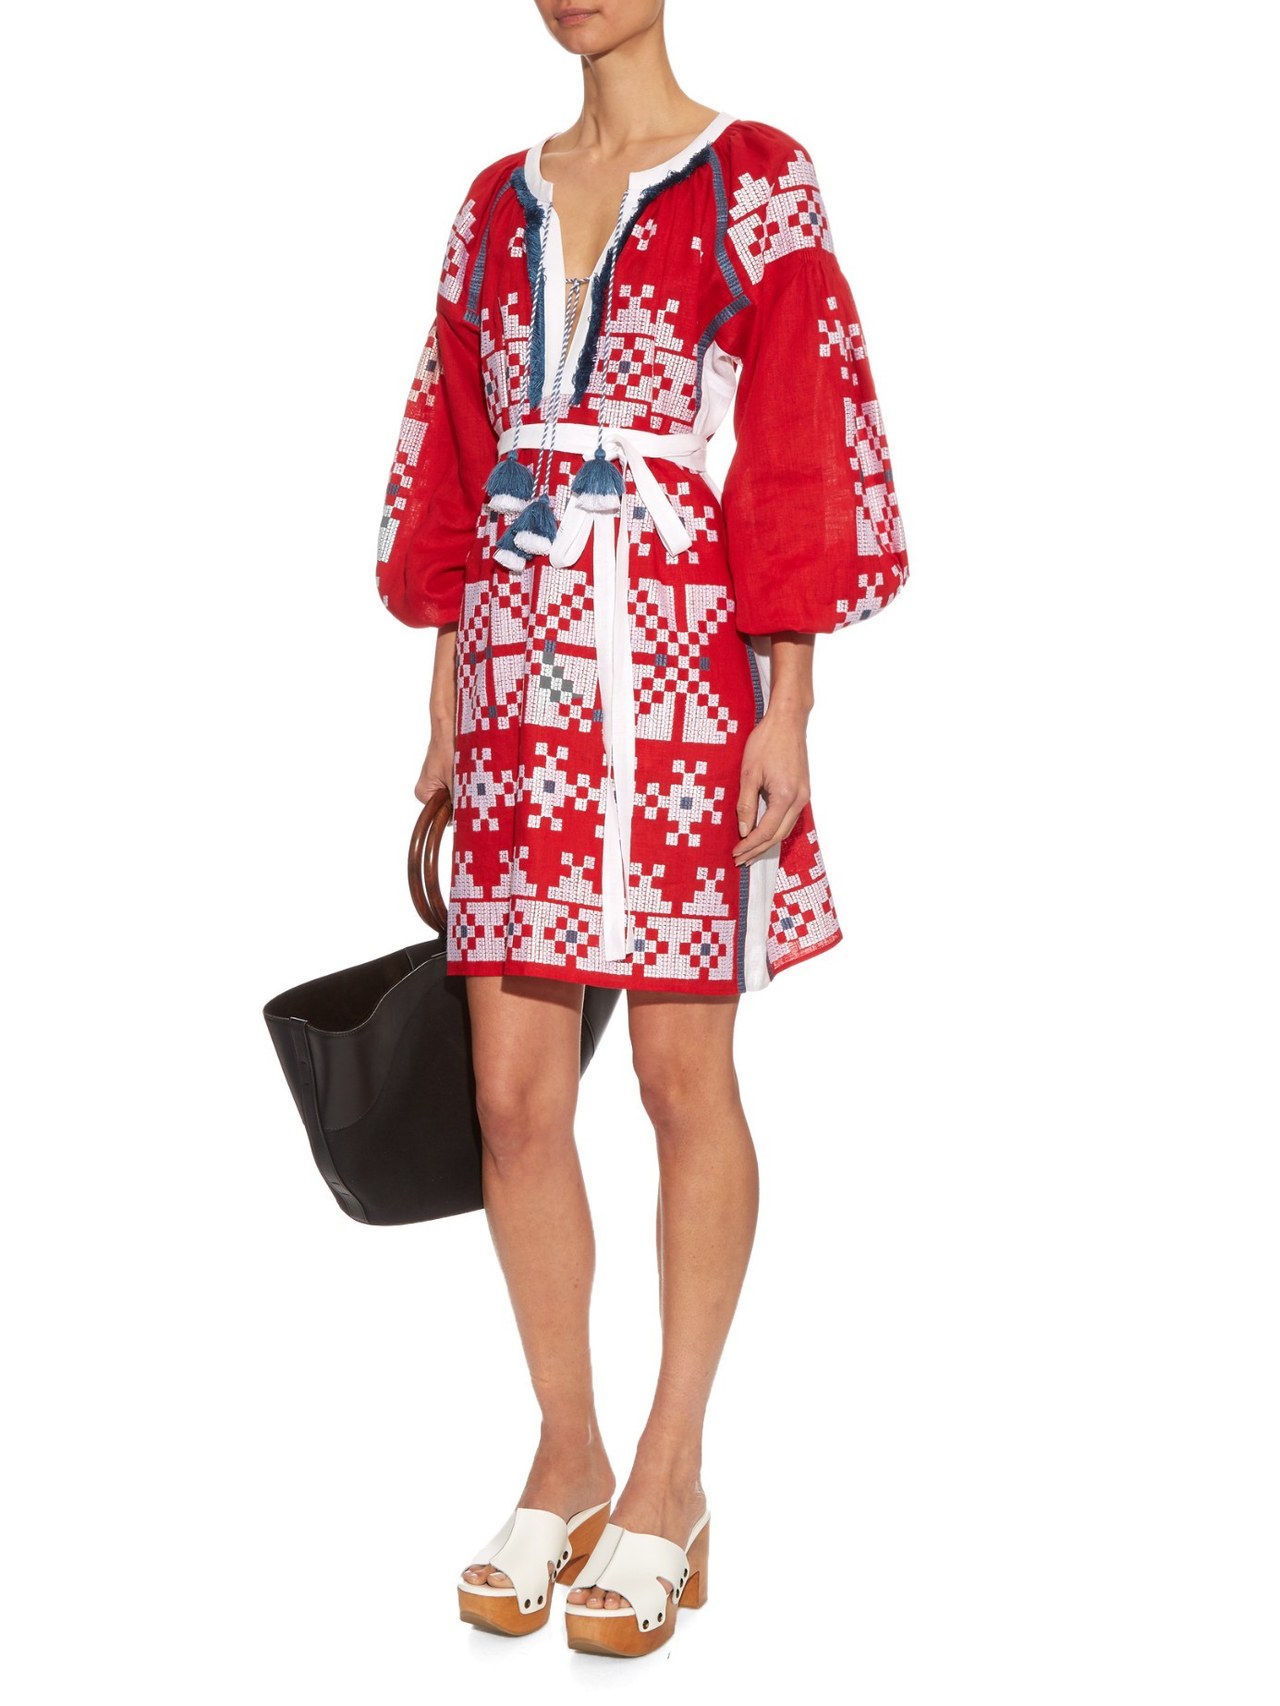 سيرة حياة Kin Linen Embroidered Dress, $1,998, [matchesfashion.com](http://www.matchesfashion.com/us/products/Vita-Kin-Geometric-embroidered-linen-dress-1050692)